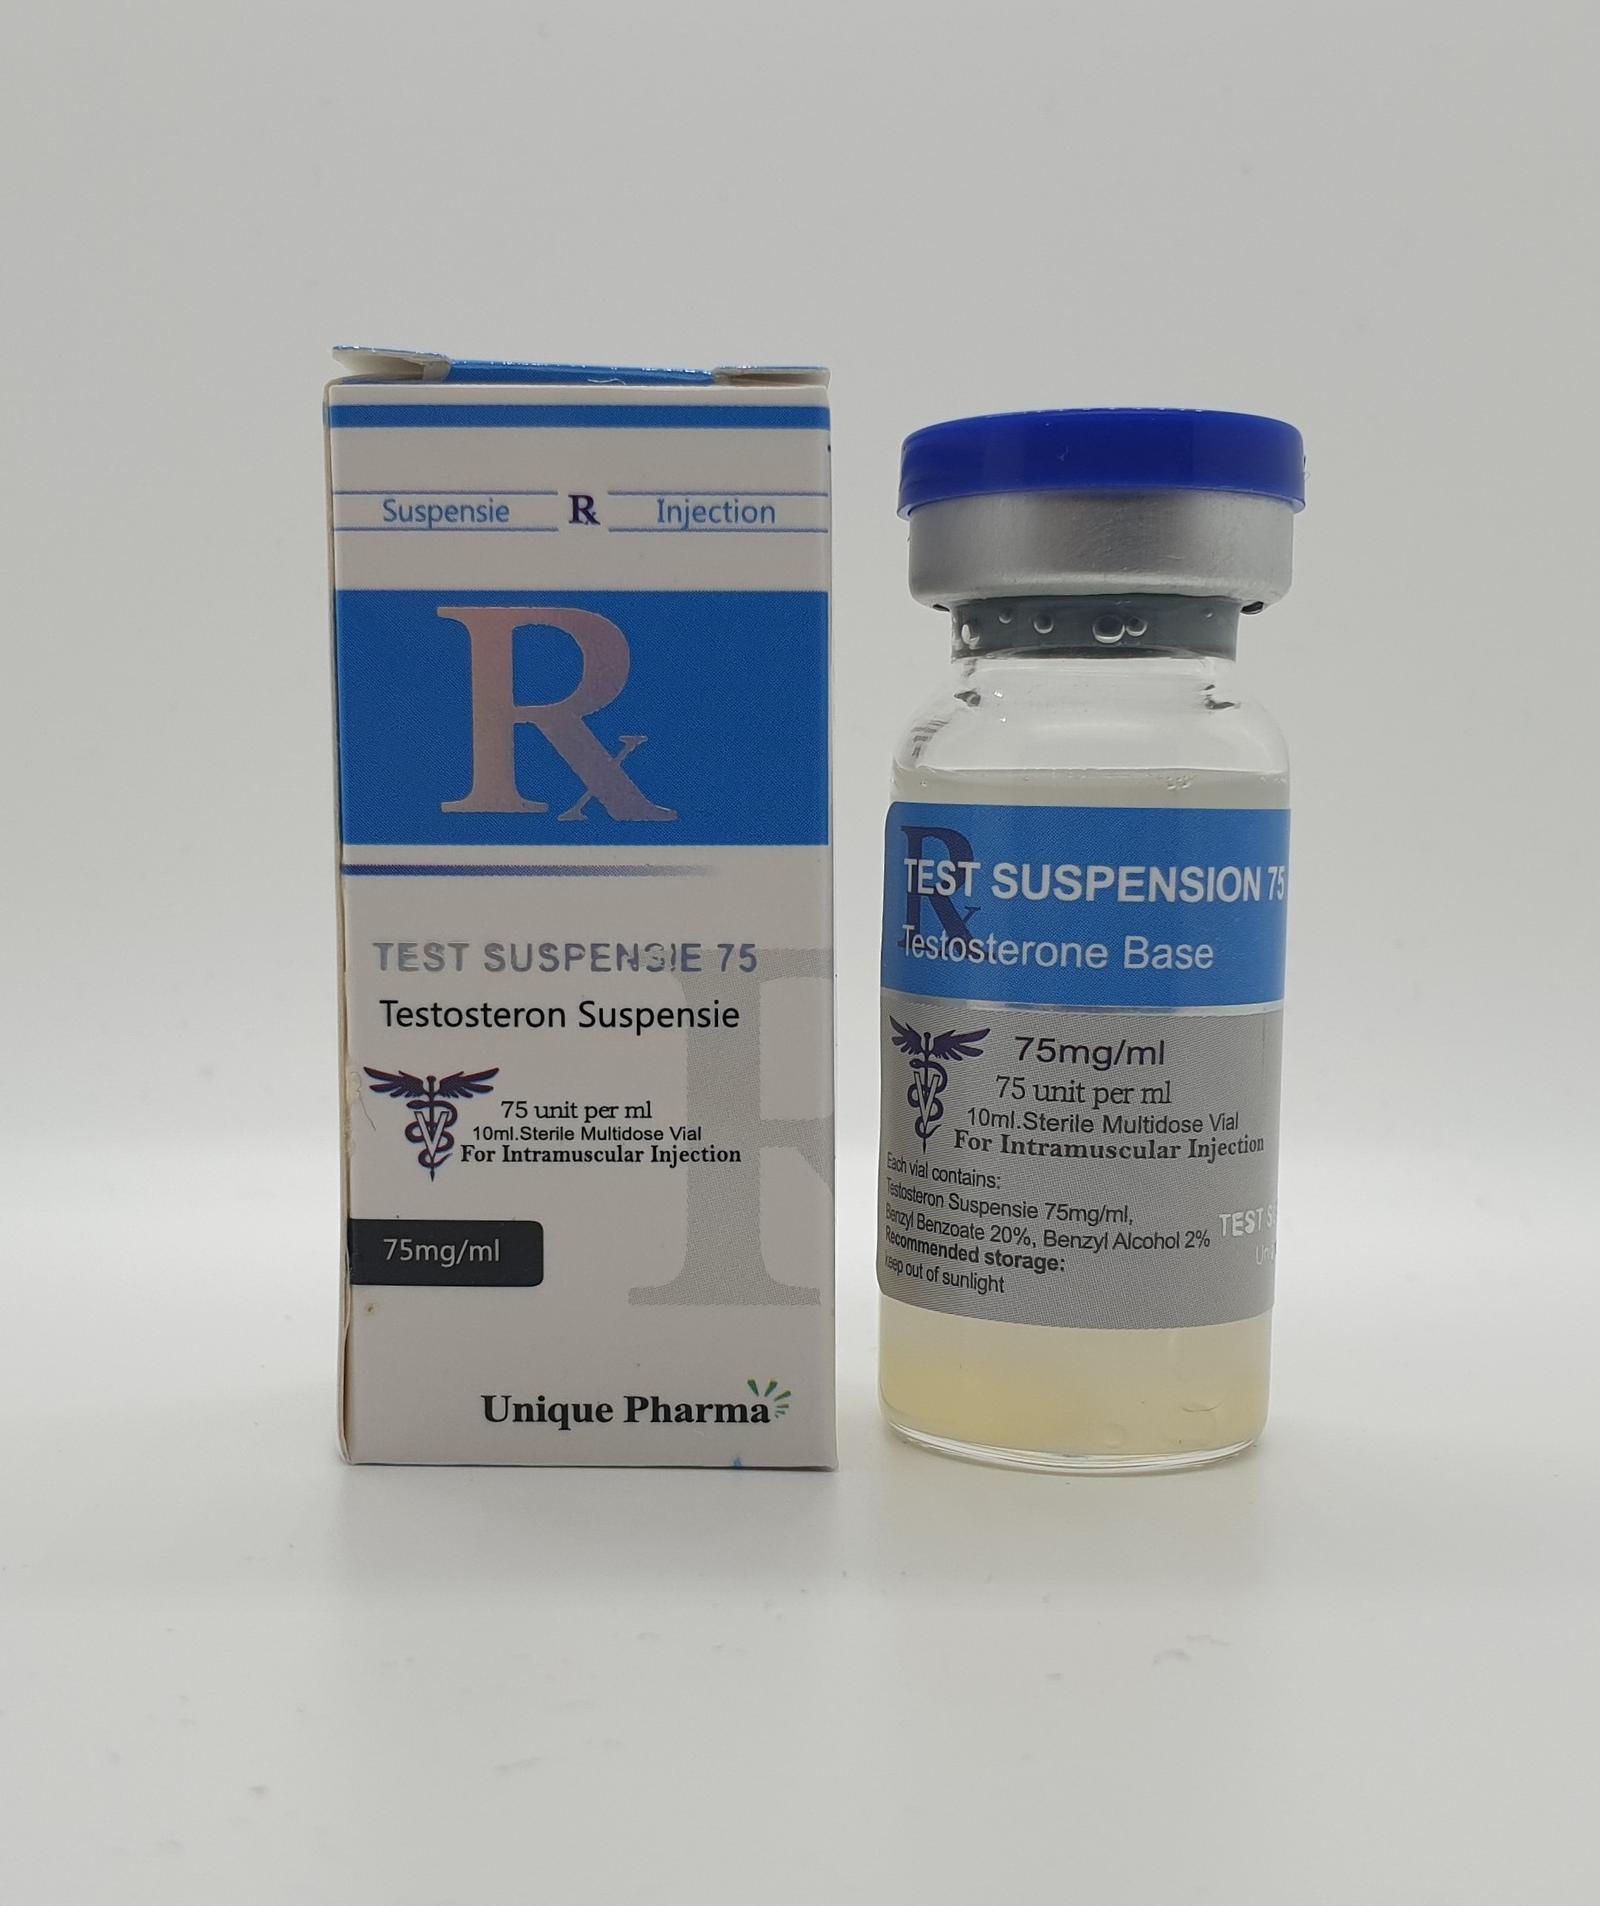 Testosteron Suspensie 75 kopen by UNIQUE PHARMA®